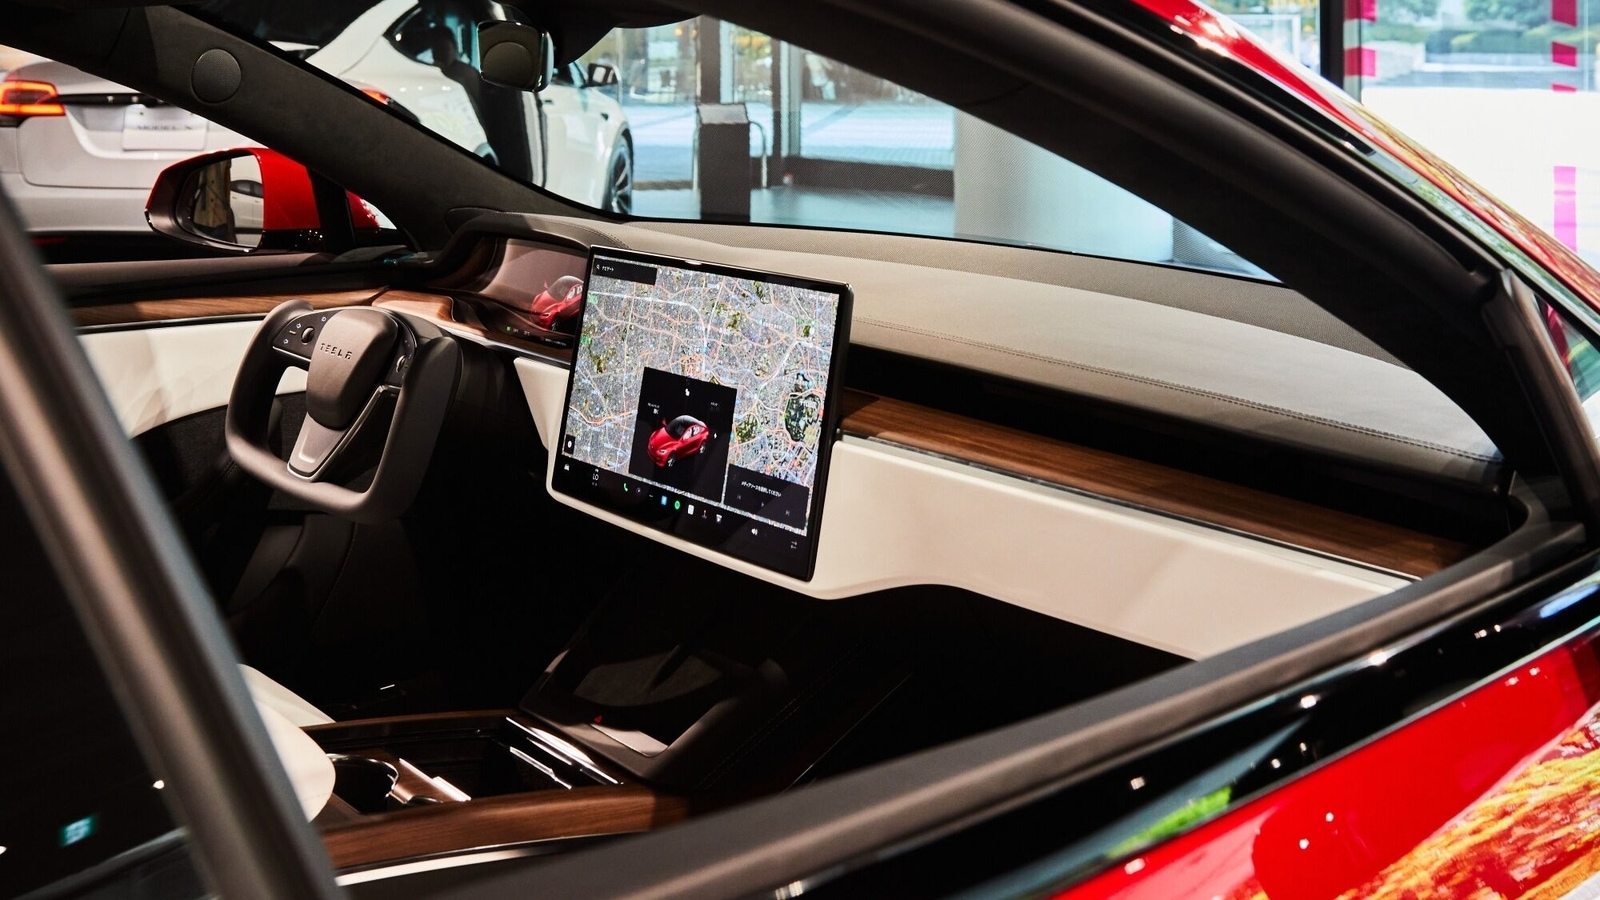 Tesla memperbarui aplikasi iPhone-nya untuk meningkatkan pelacakan dan keamanan yang akurat serupa dengan teknologi Apple AirTag